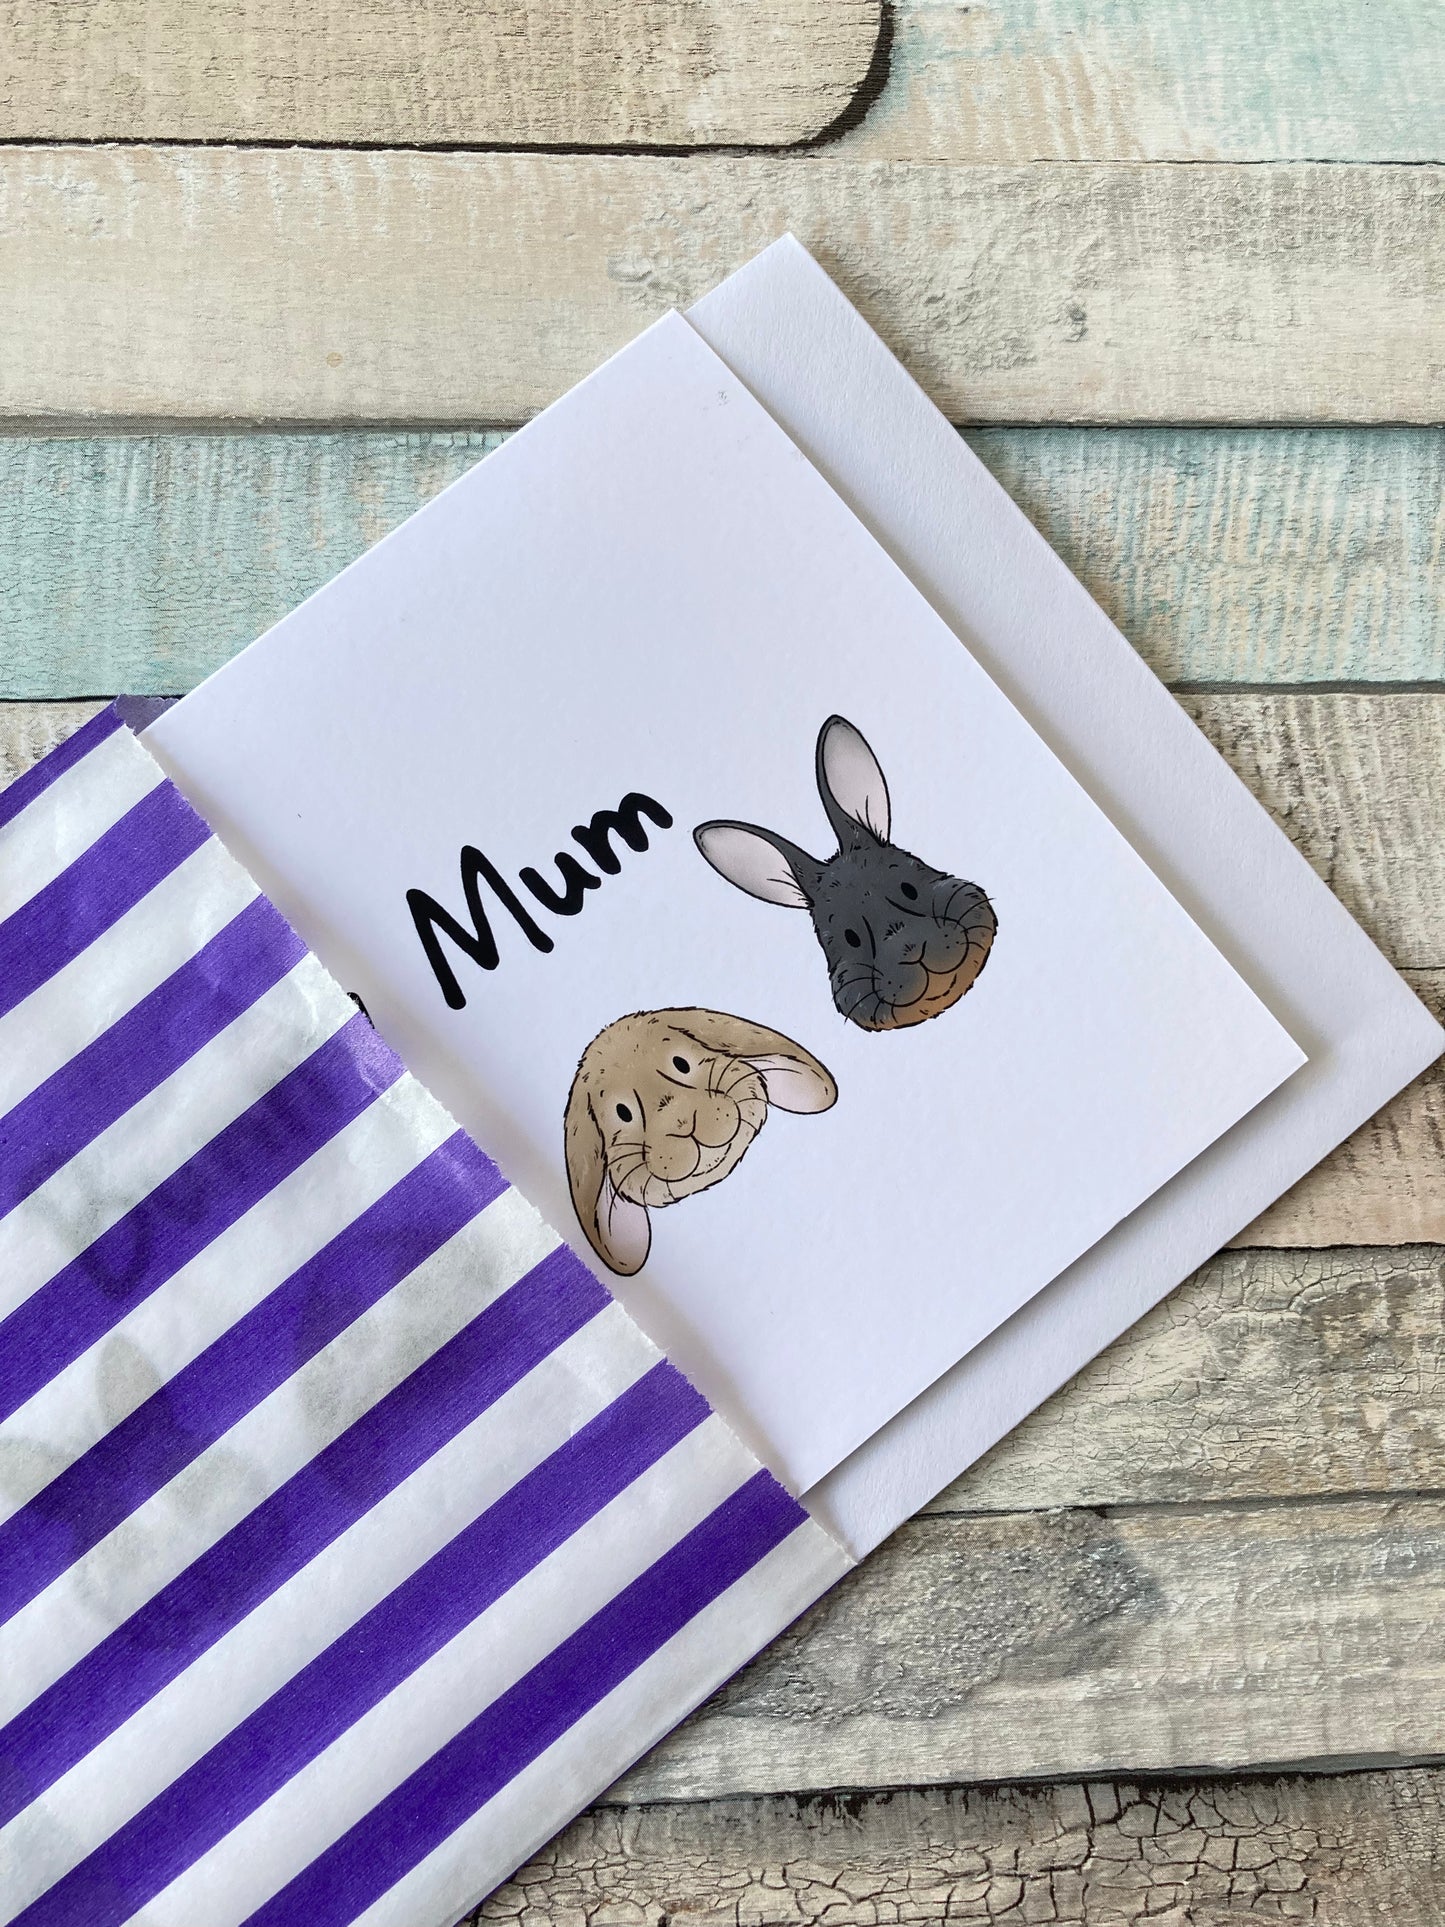 Bunny Mum A6 Blank Greeting card, Cute Pet Rabbit Gift Card, Rabbit Lover Gift